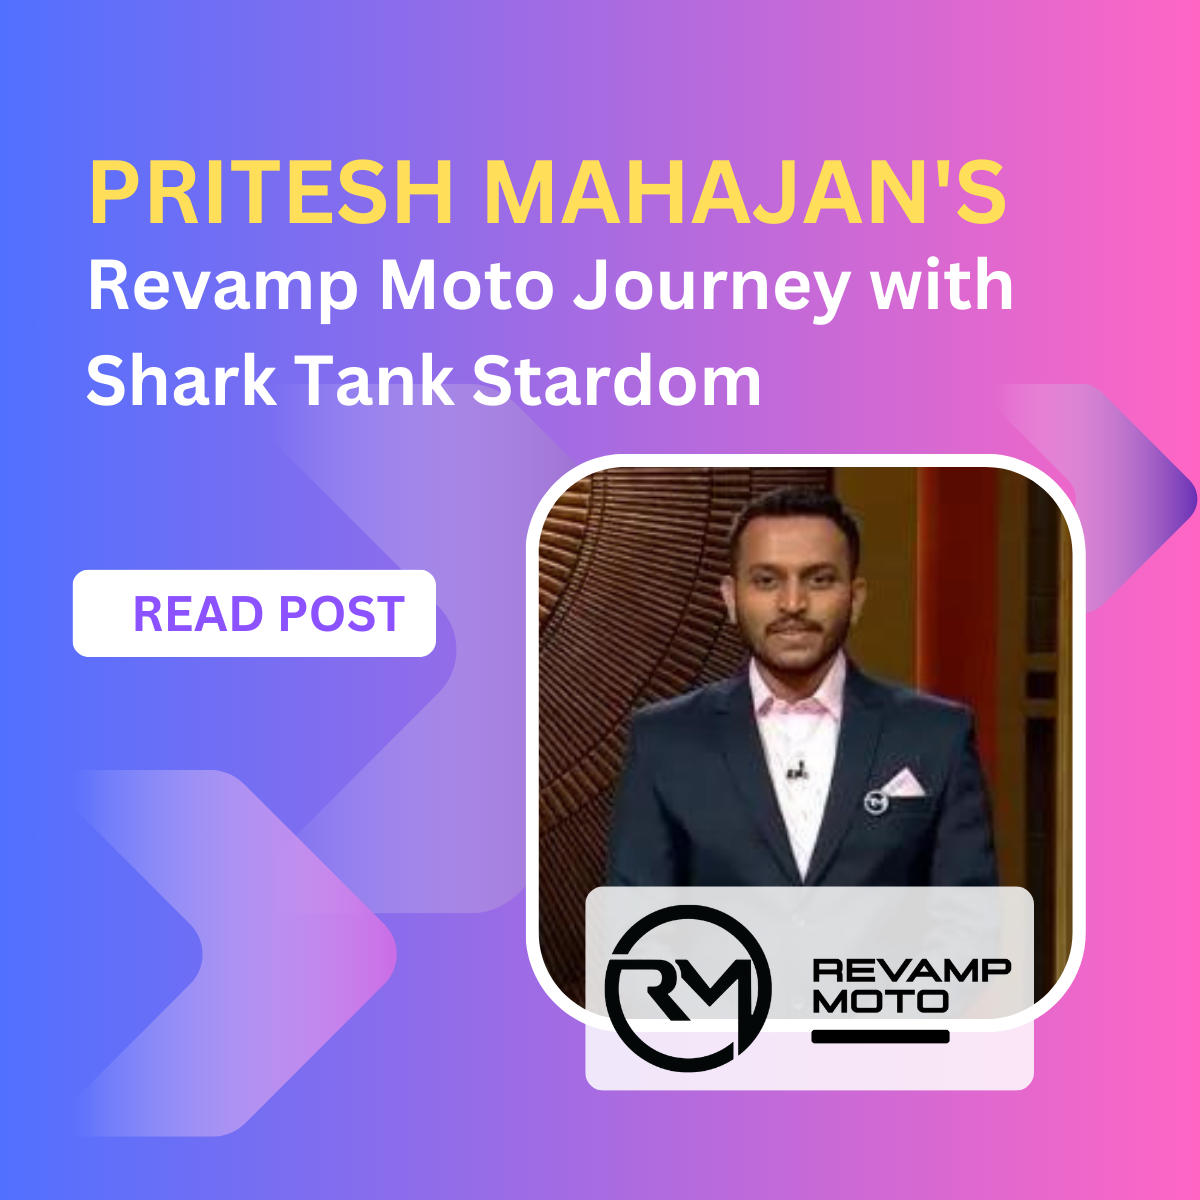 Revamp moto journey with Shark Tank stardom